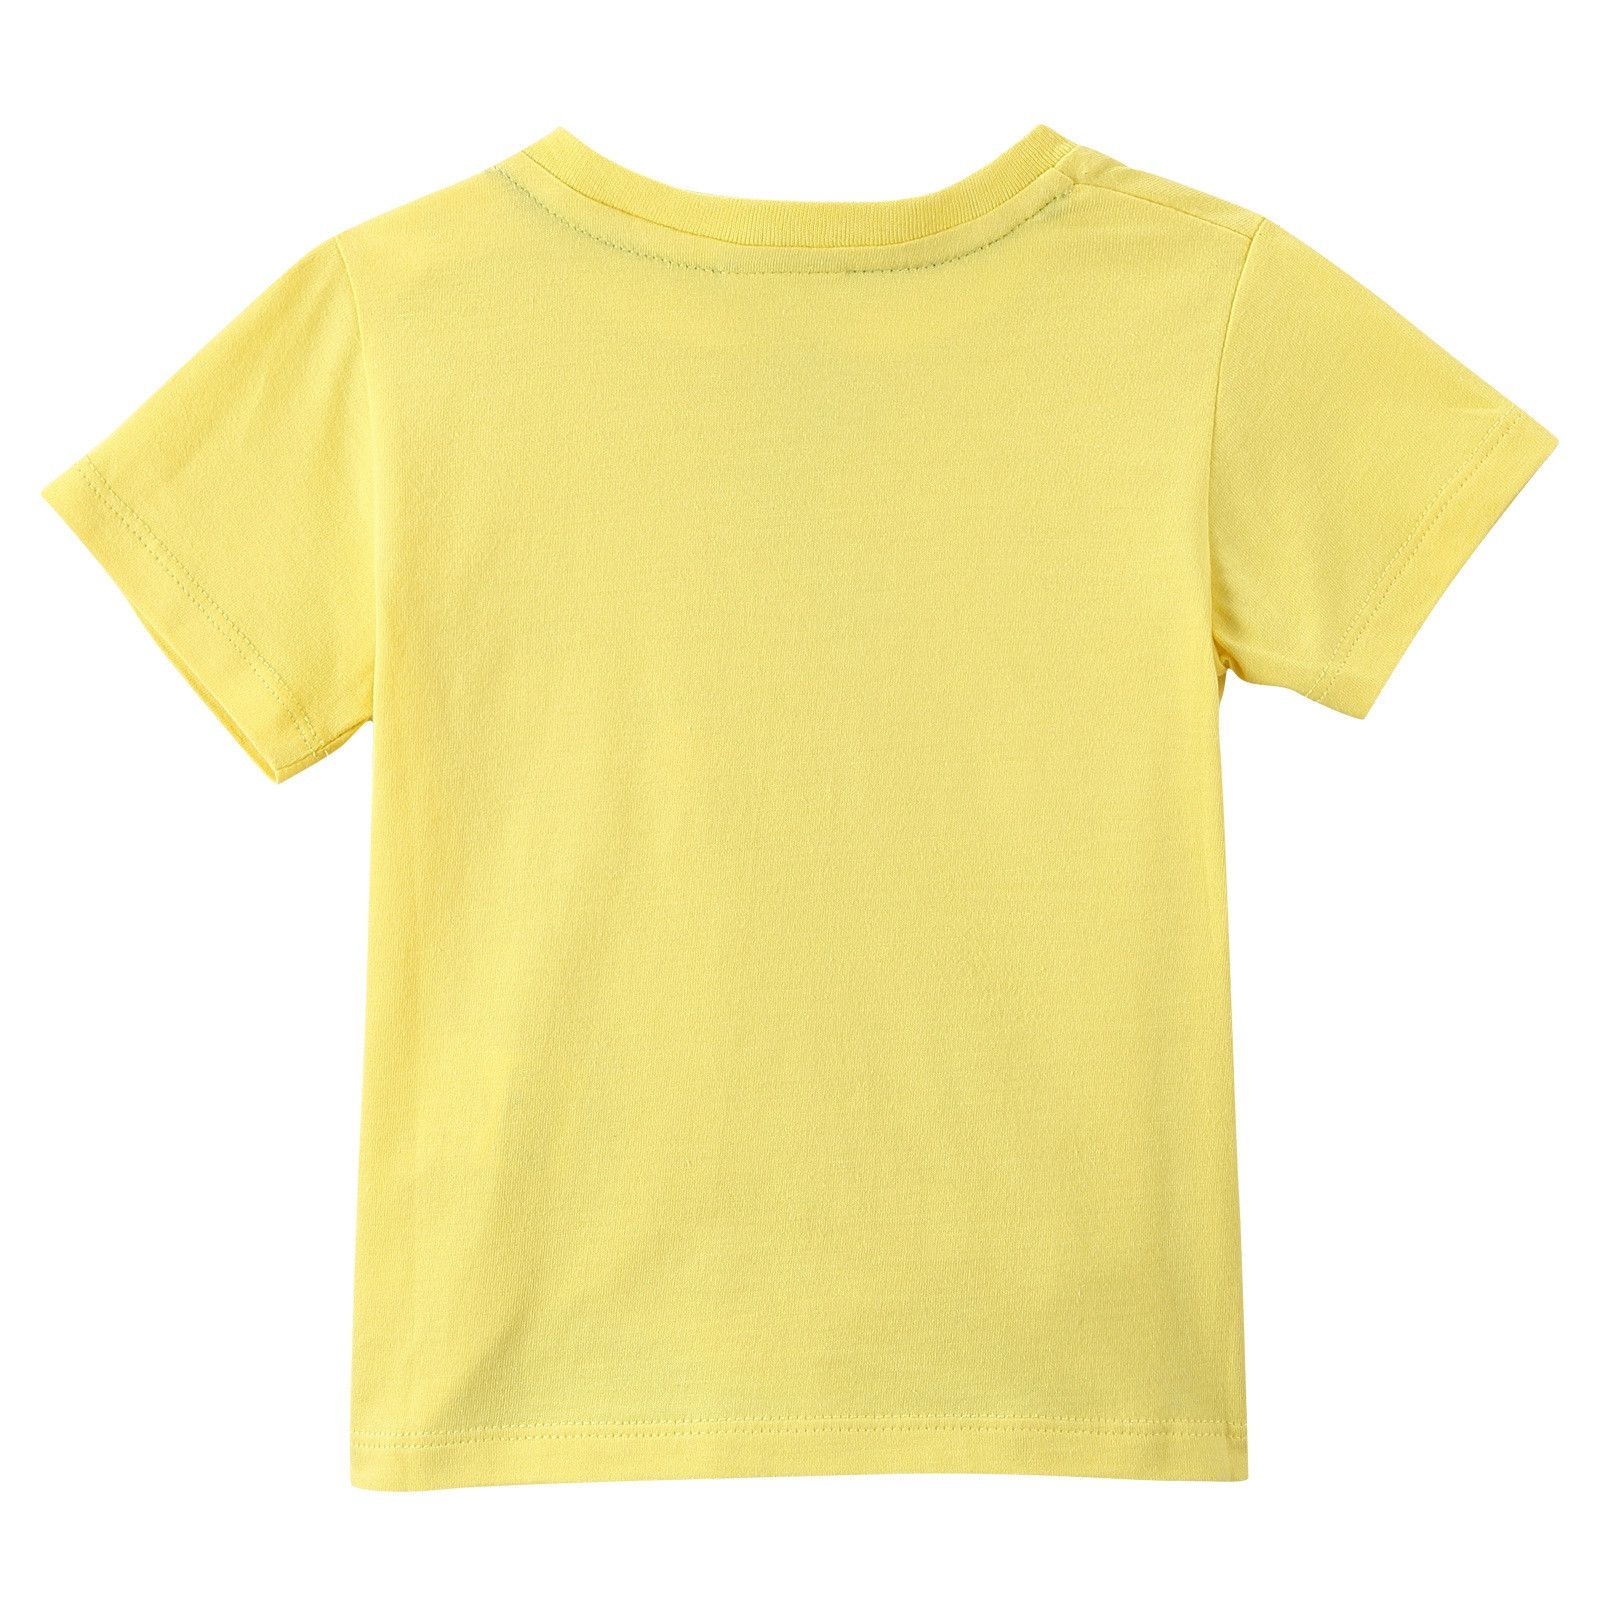 Baby Boys Yellow Cotton 'Monster' Printed T-Shirt - CÉMAROSE | Children's Fashion Store - 2